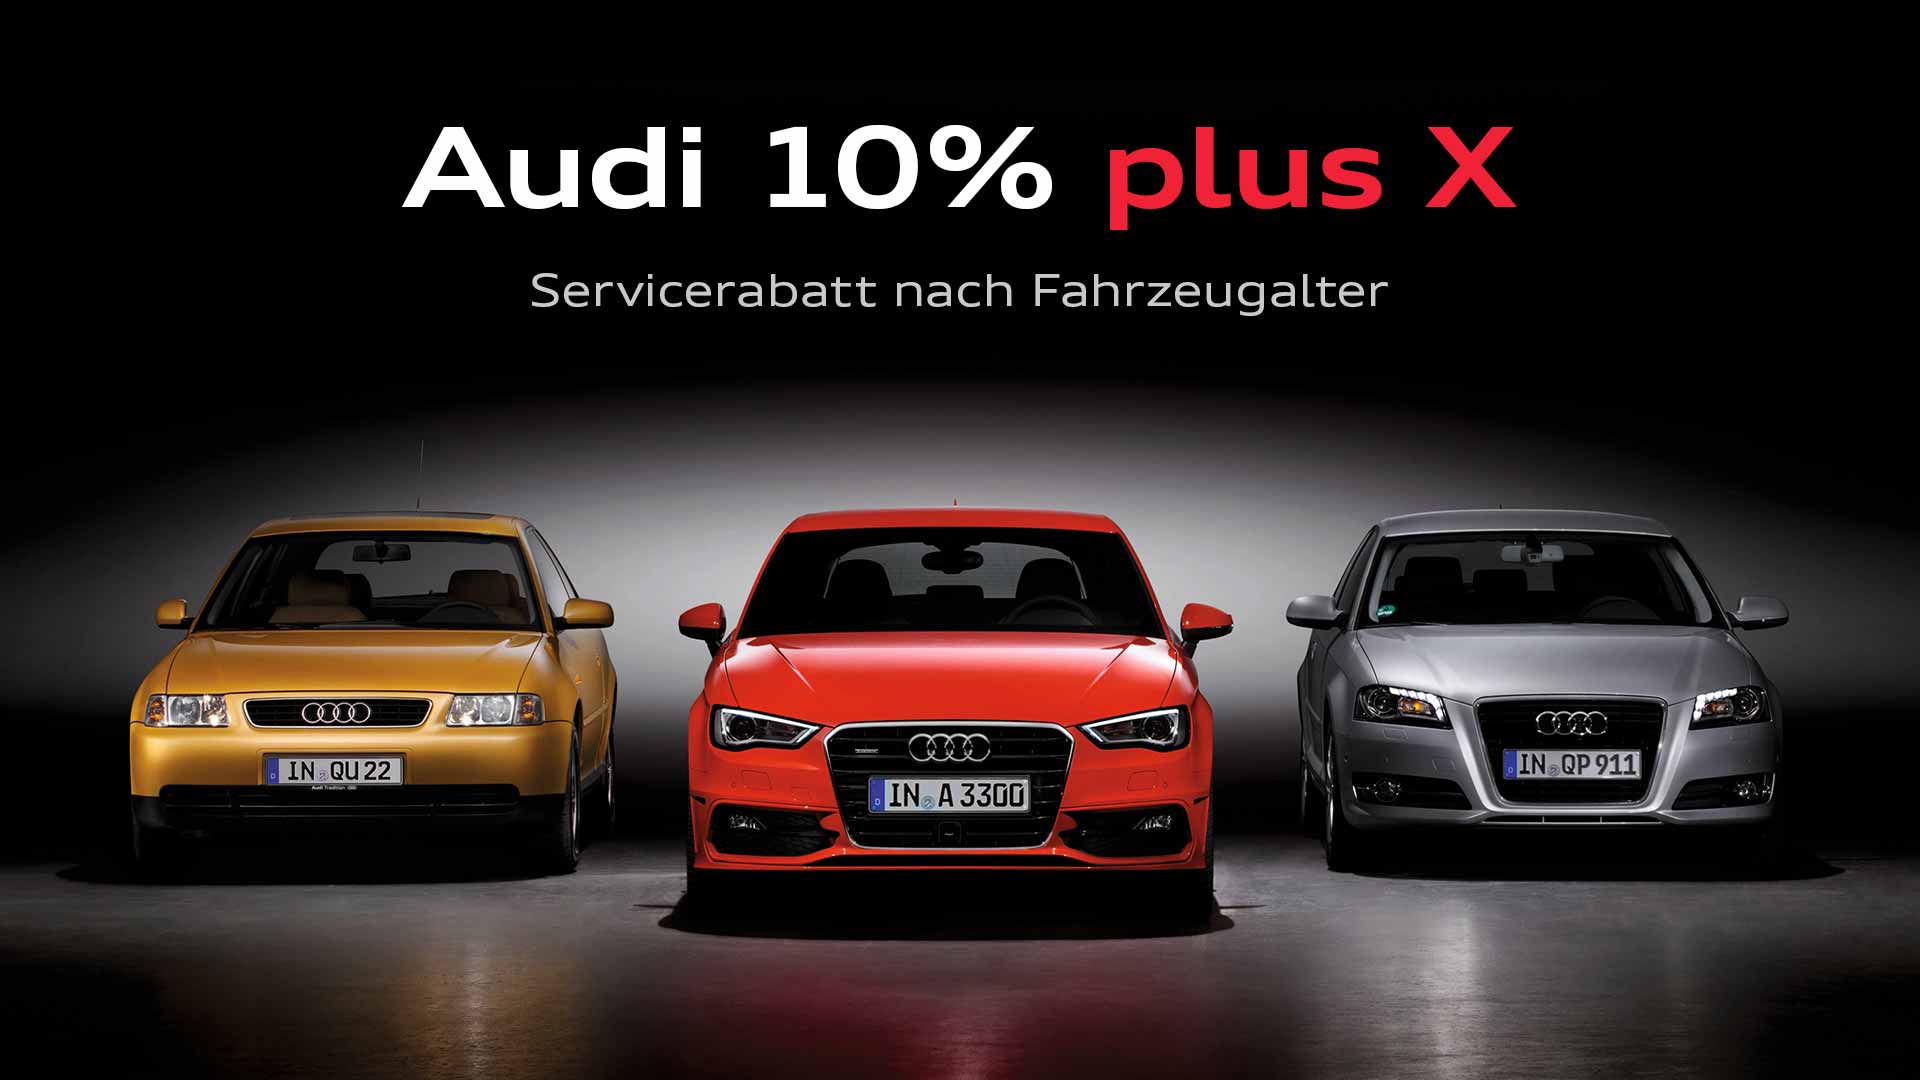 Audi Service 10% plus X Rabattaktion